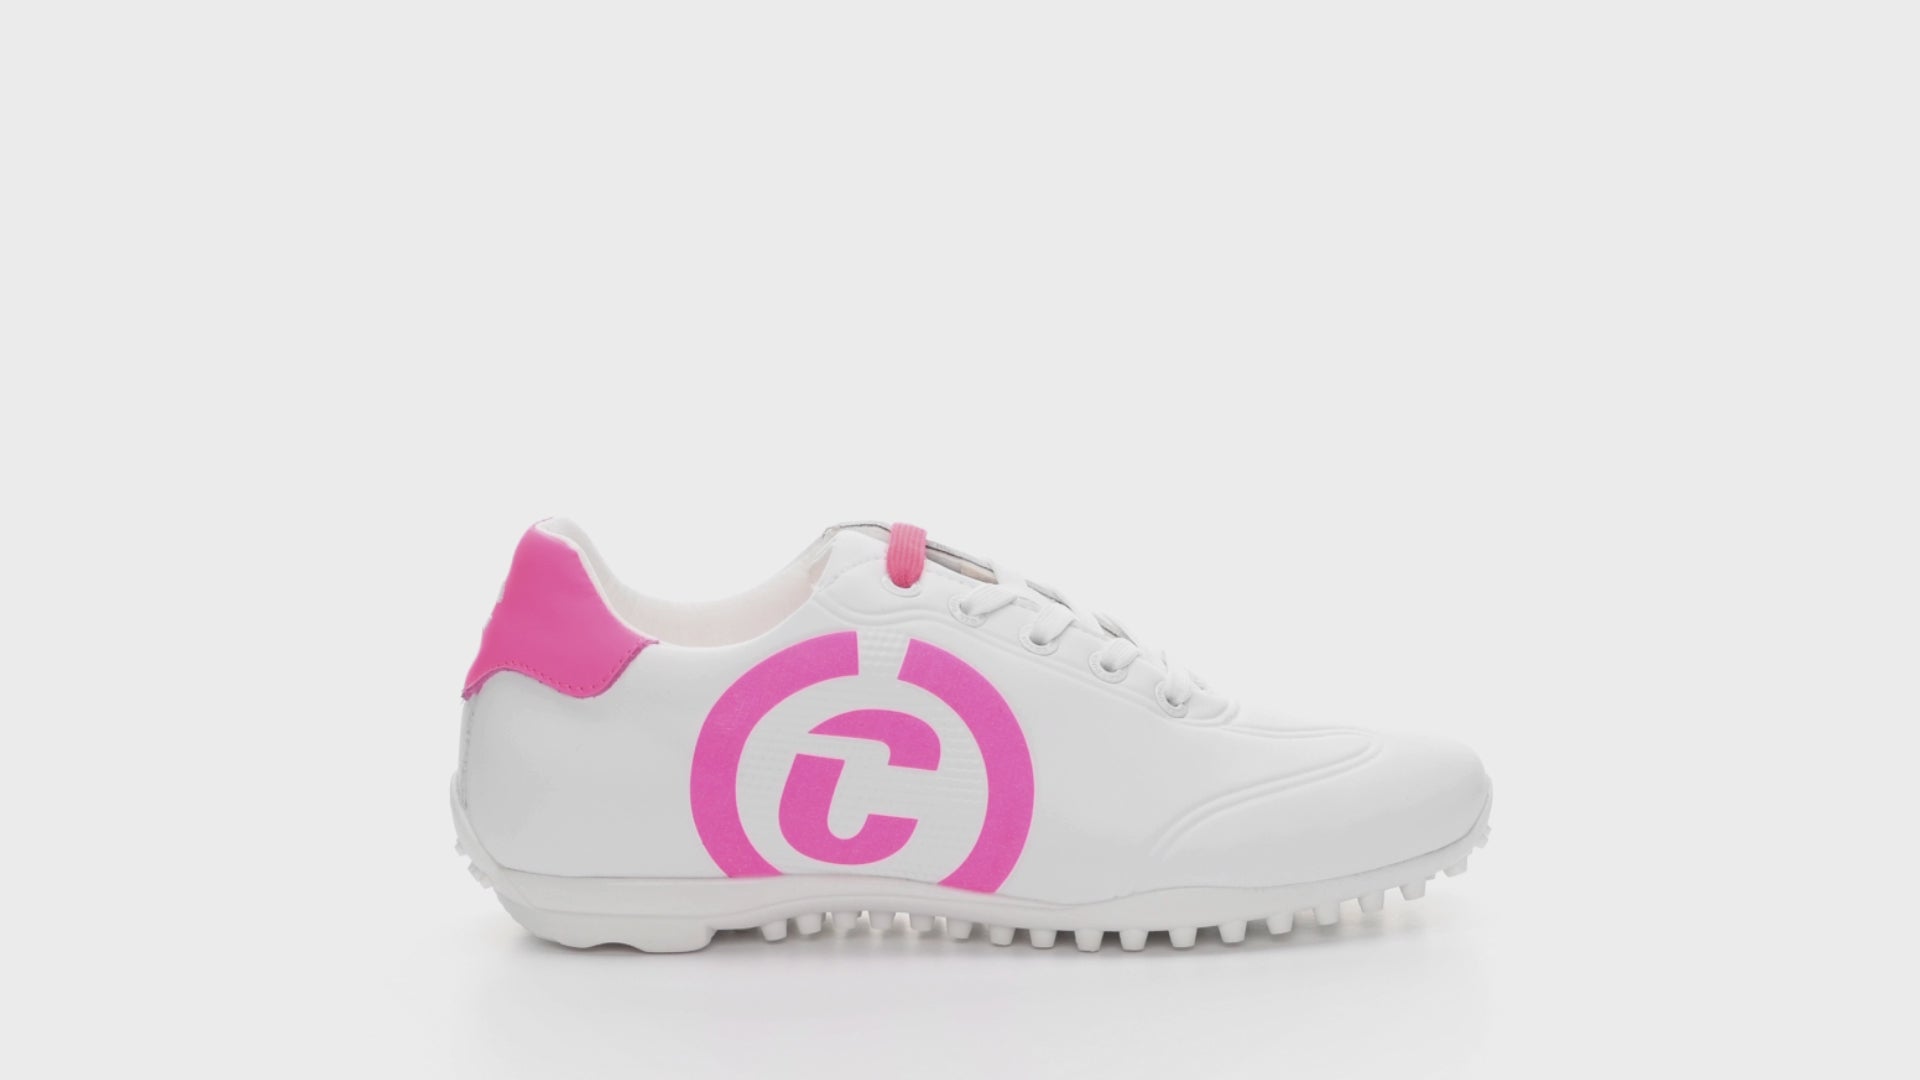 Queenscup White Women's Golf Shoe